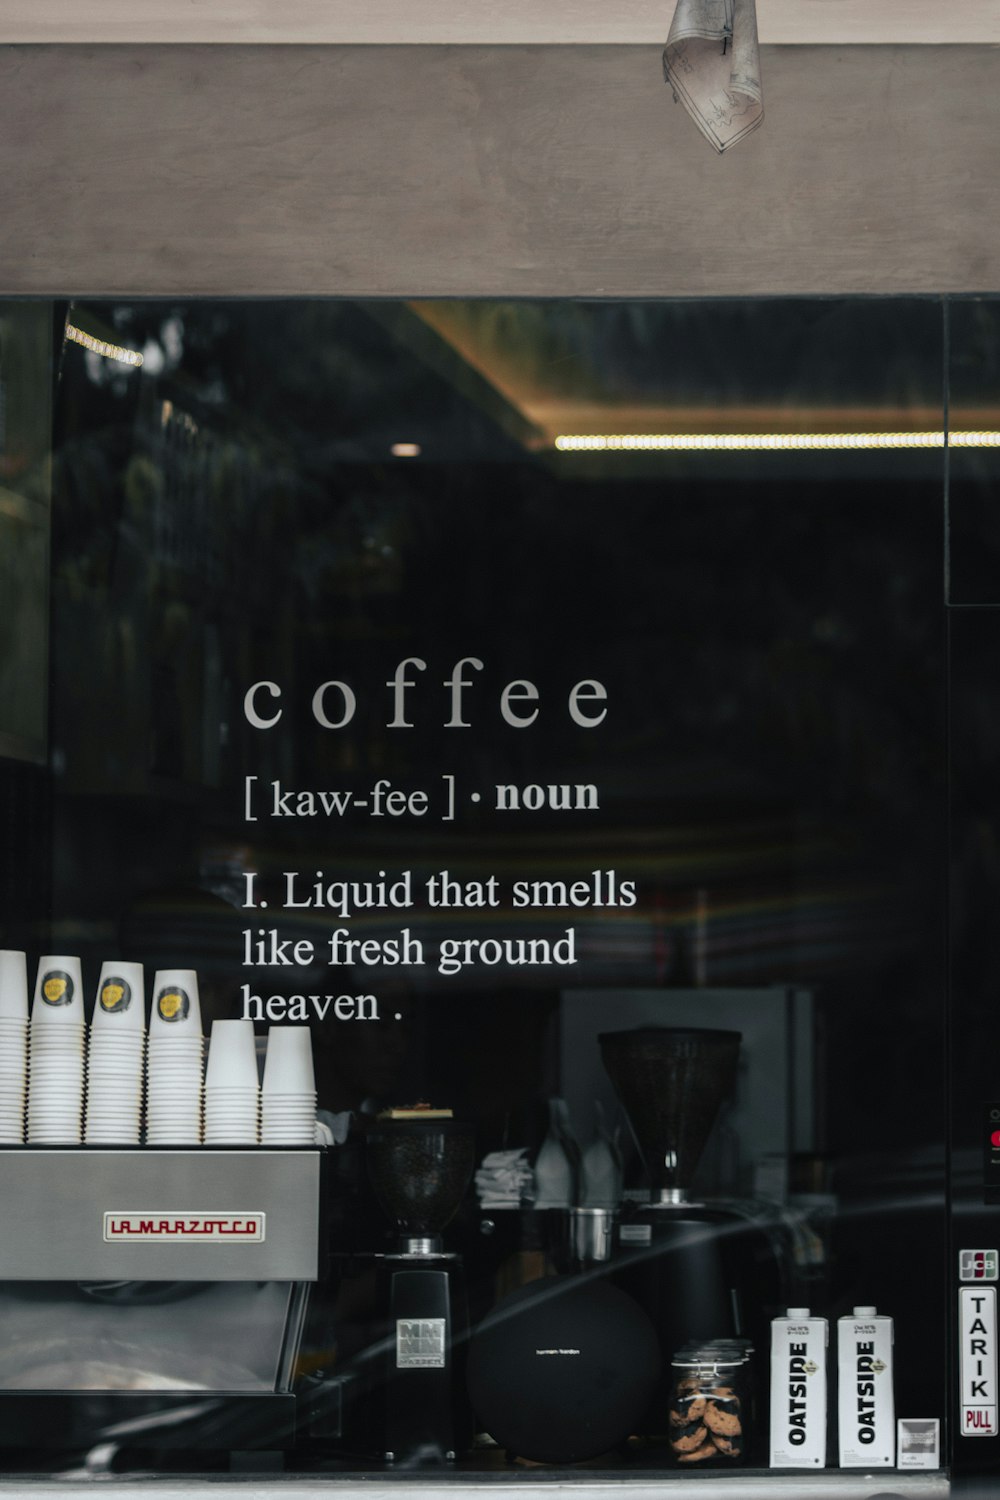 a coffee shop window with coffee cups on display